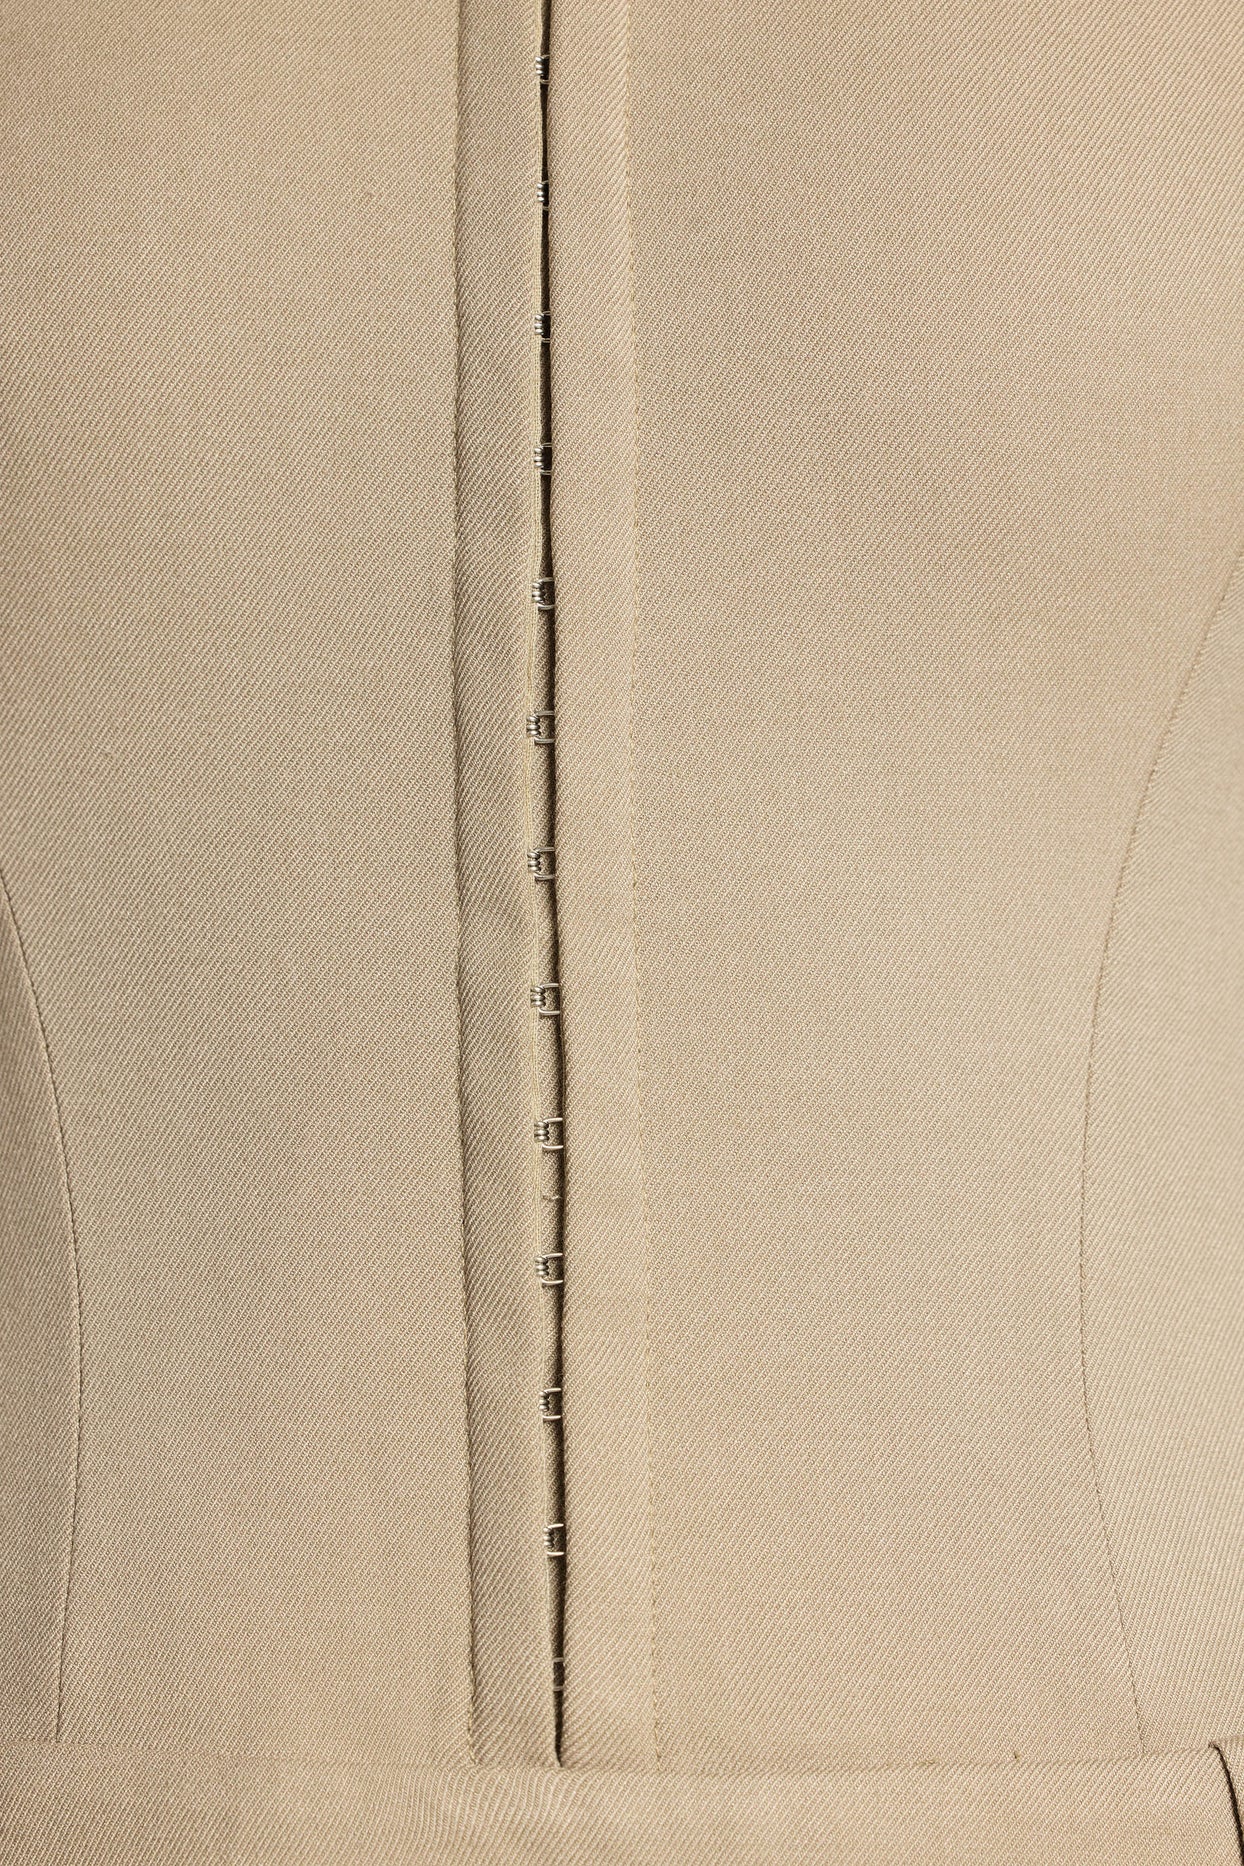 Kombinezon z gorsetem typu bandeau Petite ze szczotkowanego diagonalu w kolorze taupe